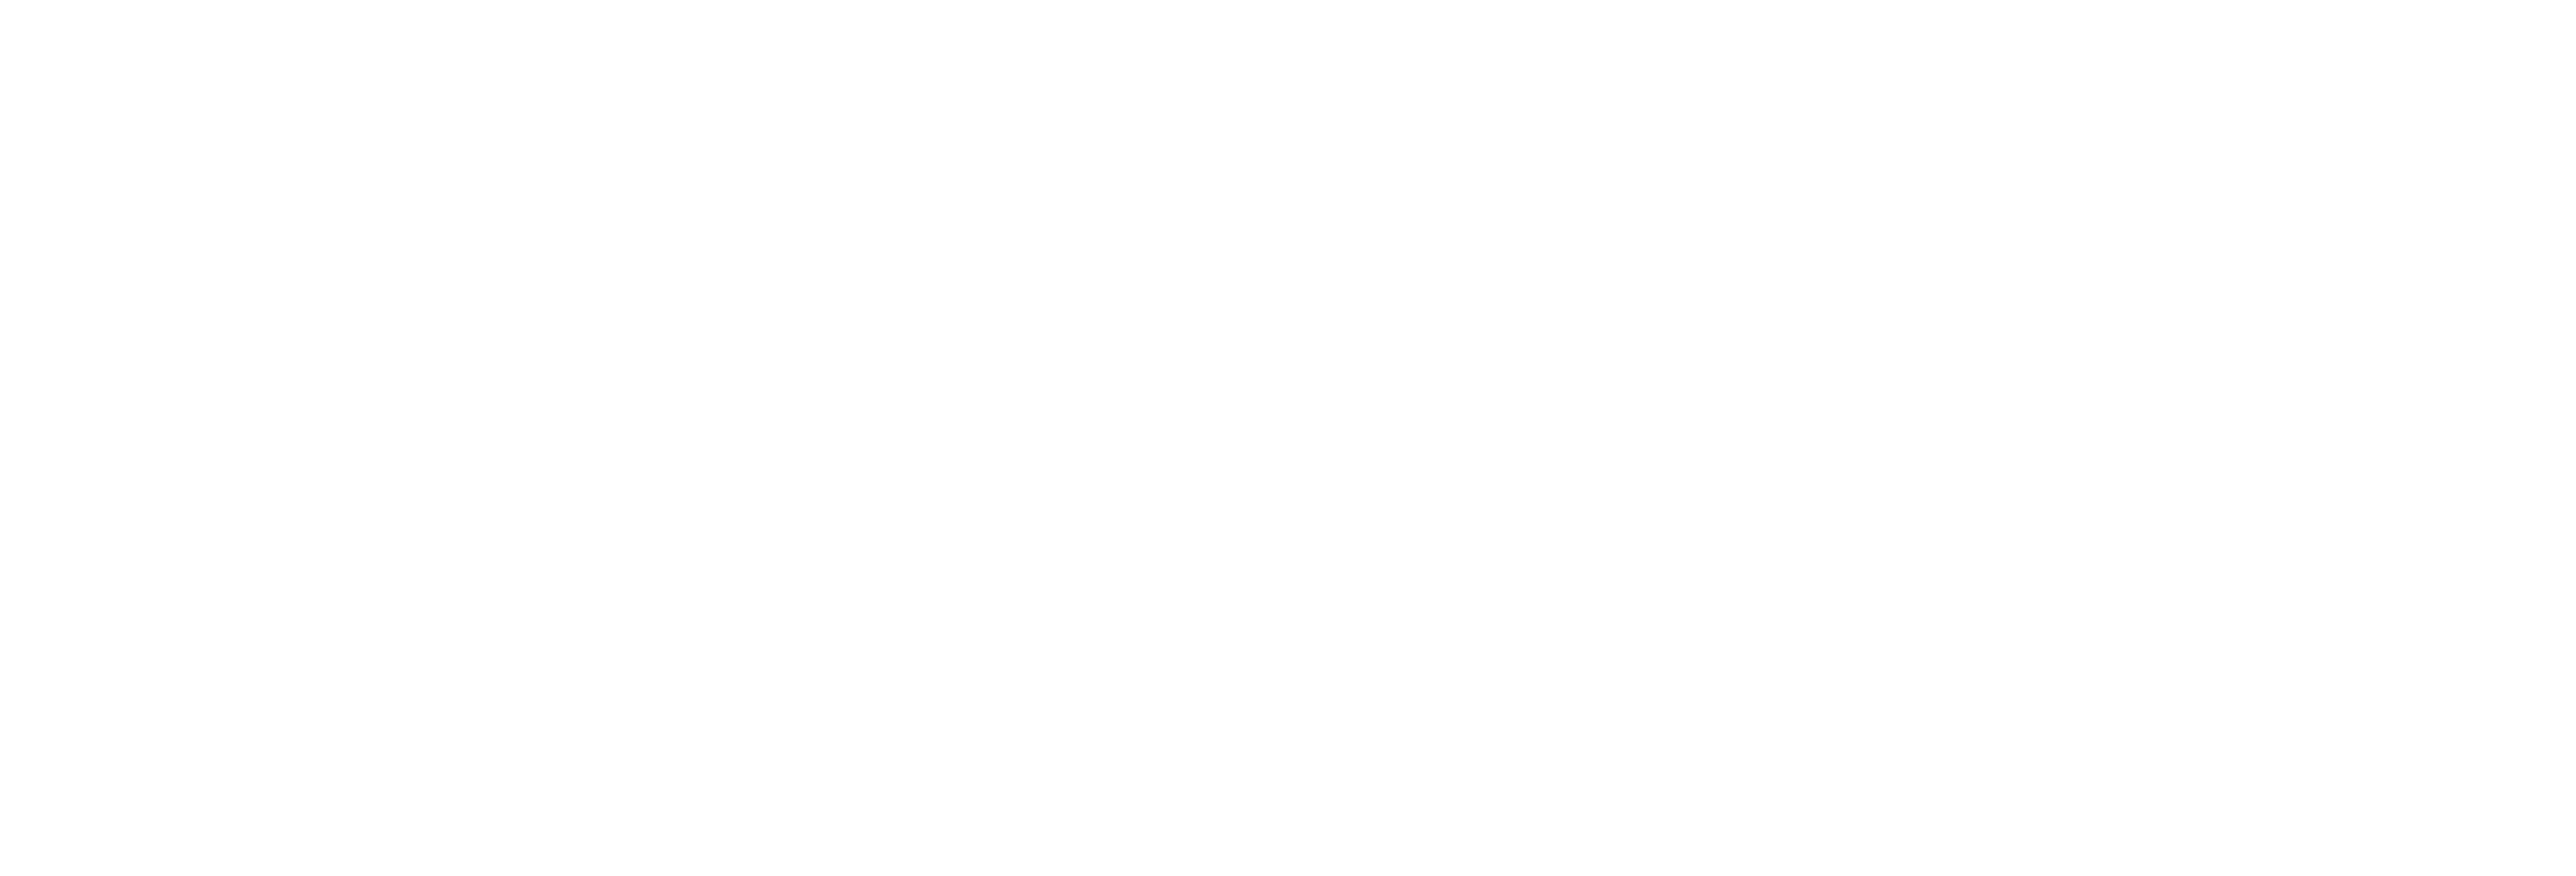 Logo mon qamis homme